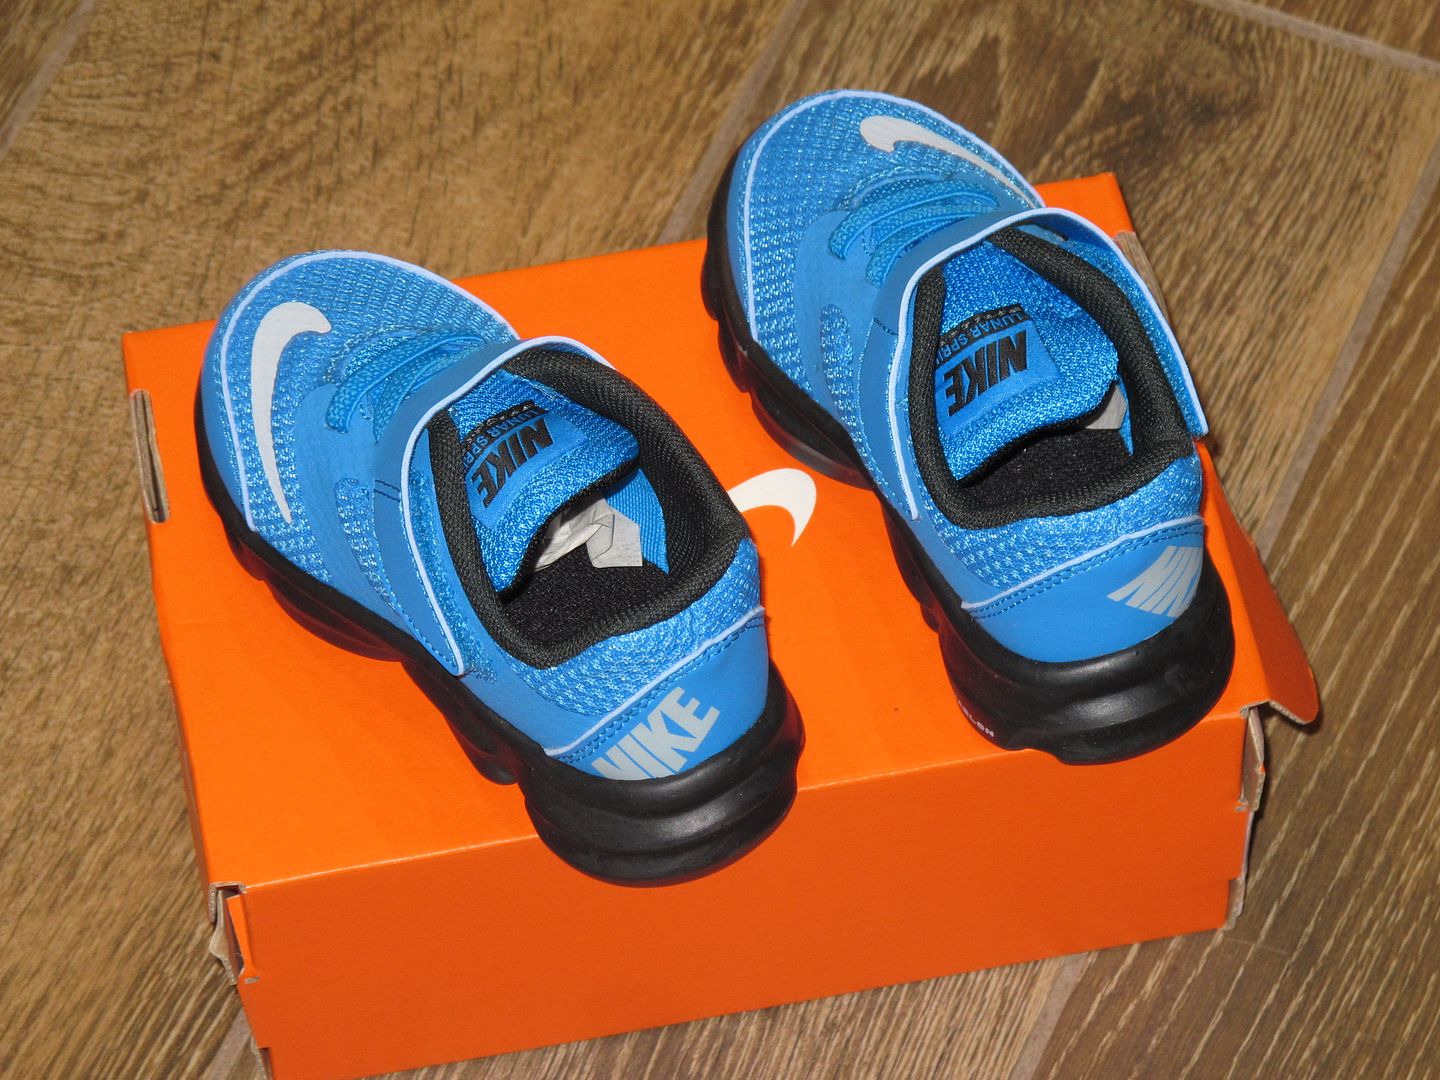 New Nike Lunarsprint TDV Boys Toddler Light Blue Black Running Shoes Size 8c